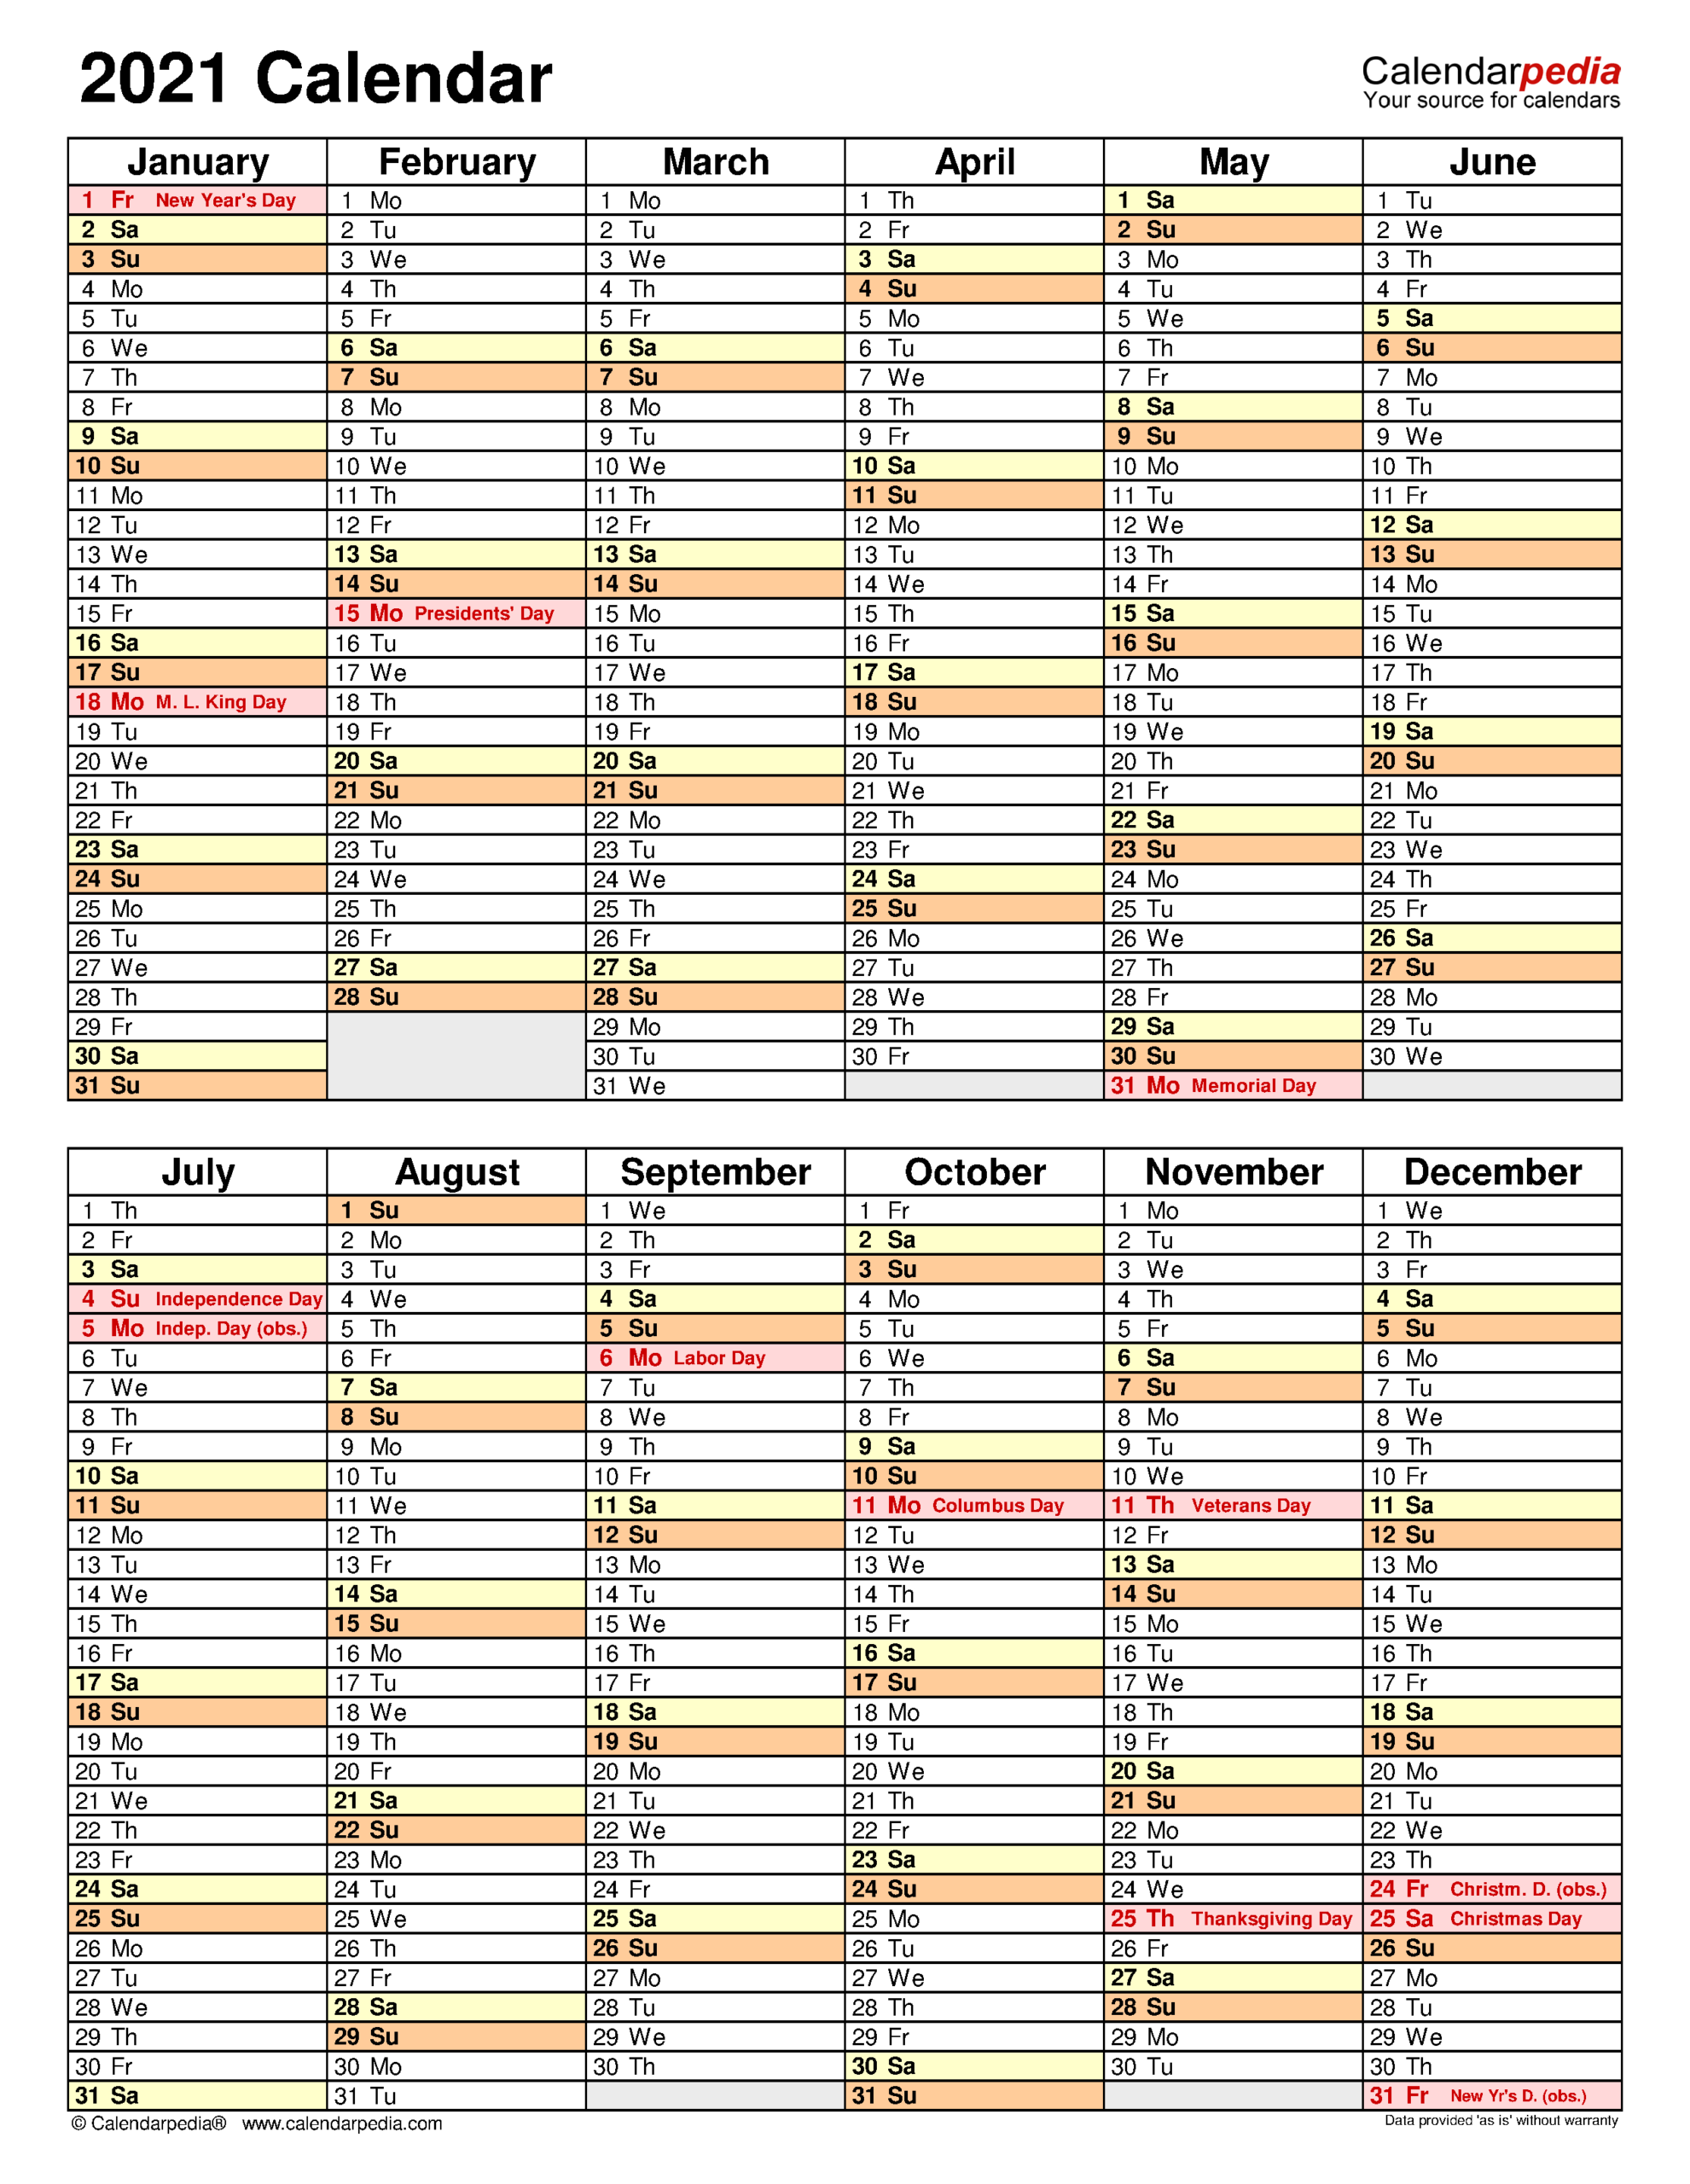 2021 Calendar - Free Printable Excel Templates - Calendarpedia